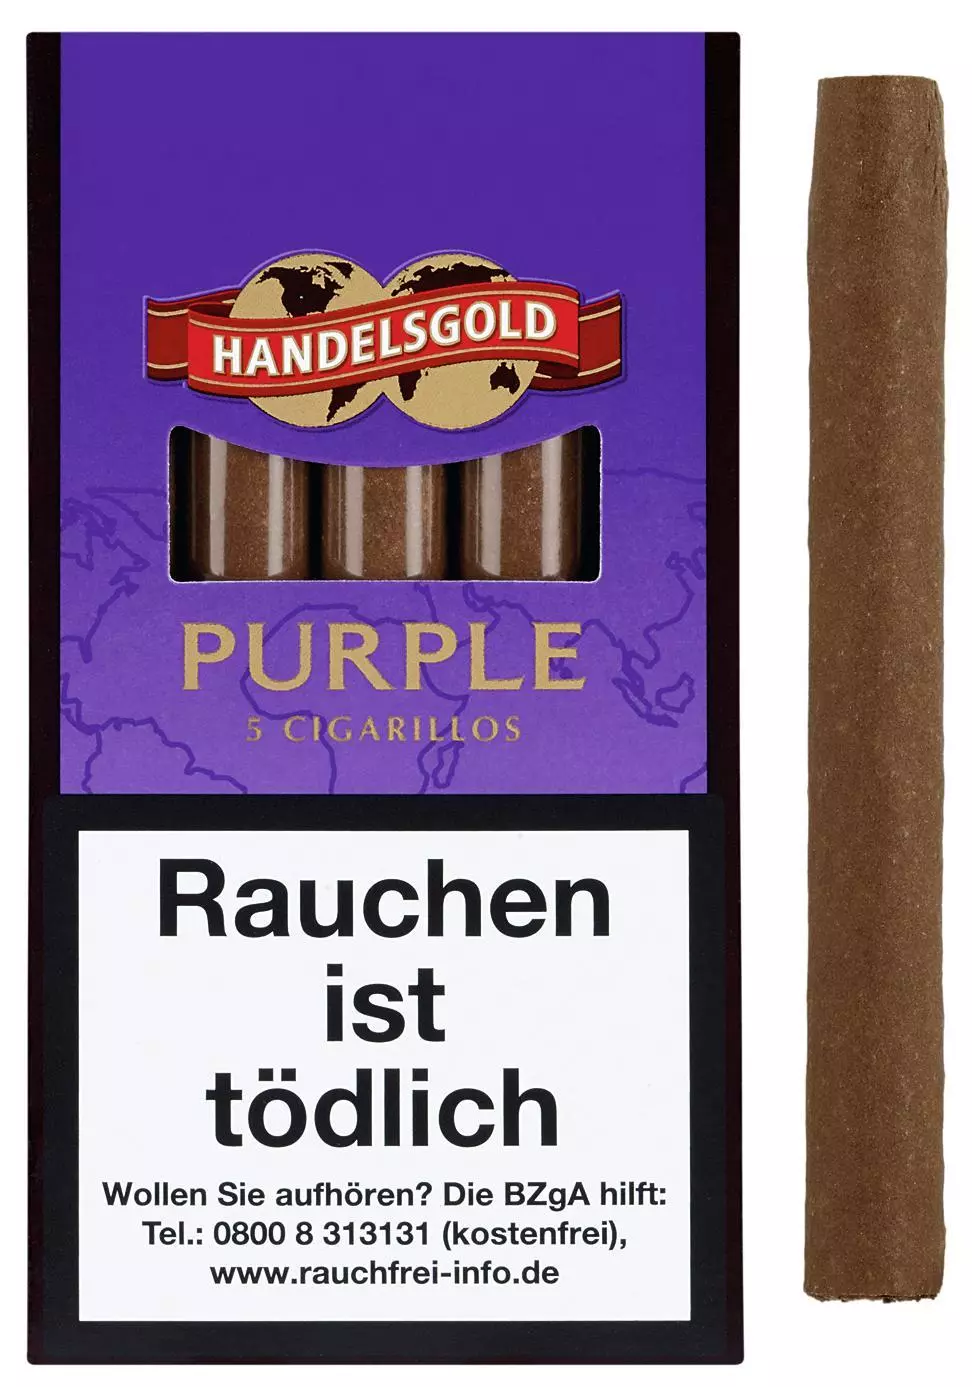 Handelsgold Sweet Purple Nr. 191 10 x 5 Zigarillos